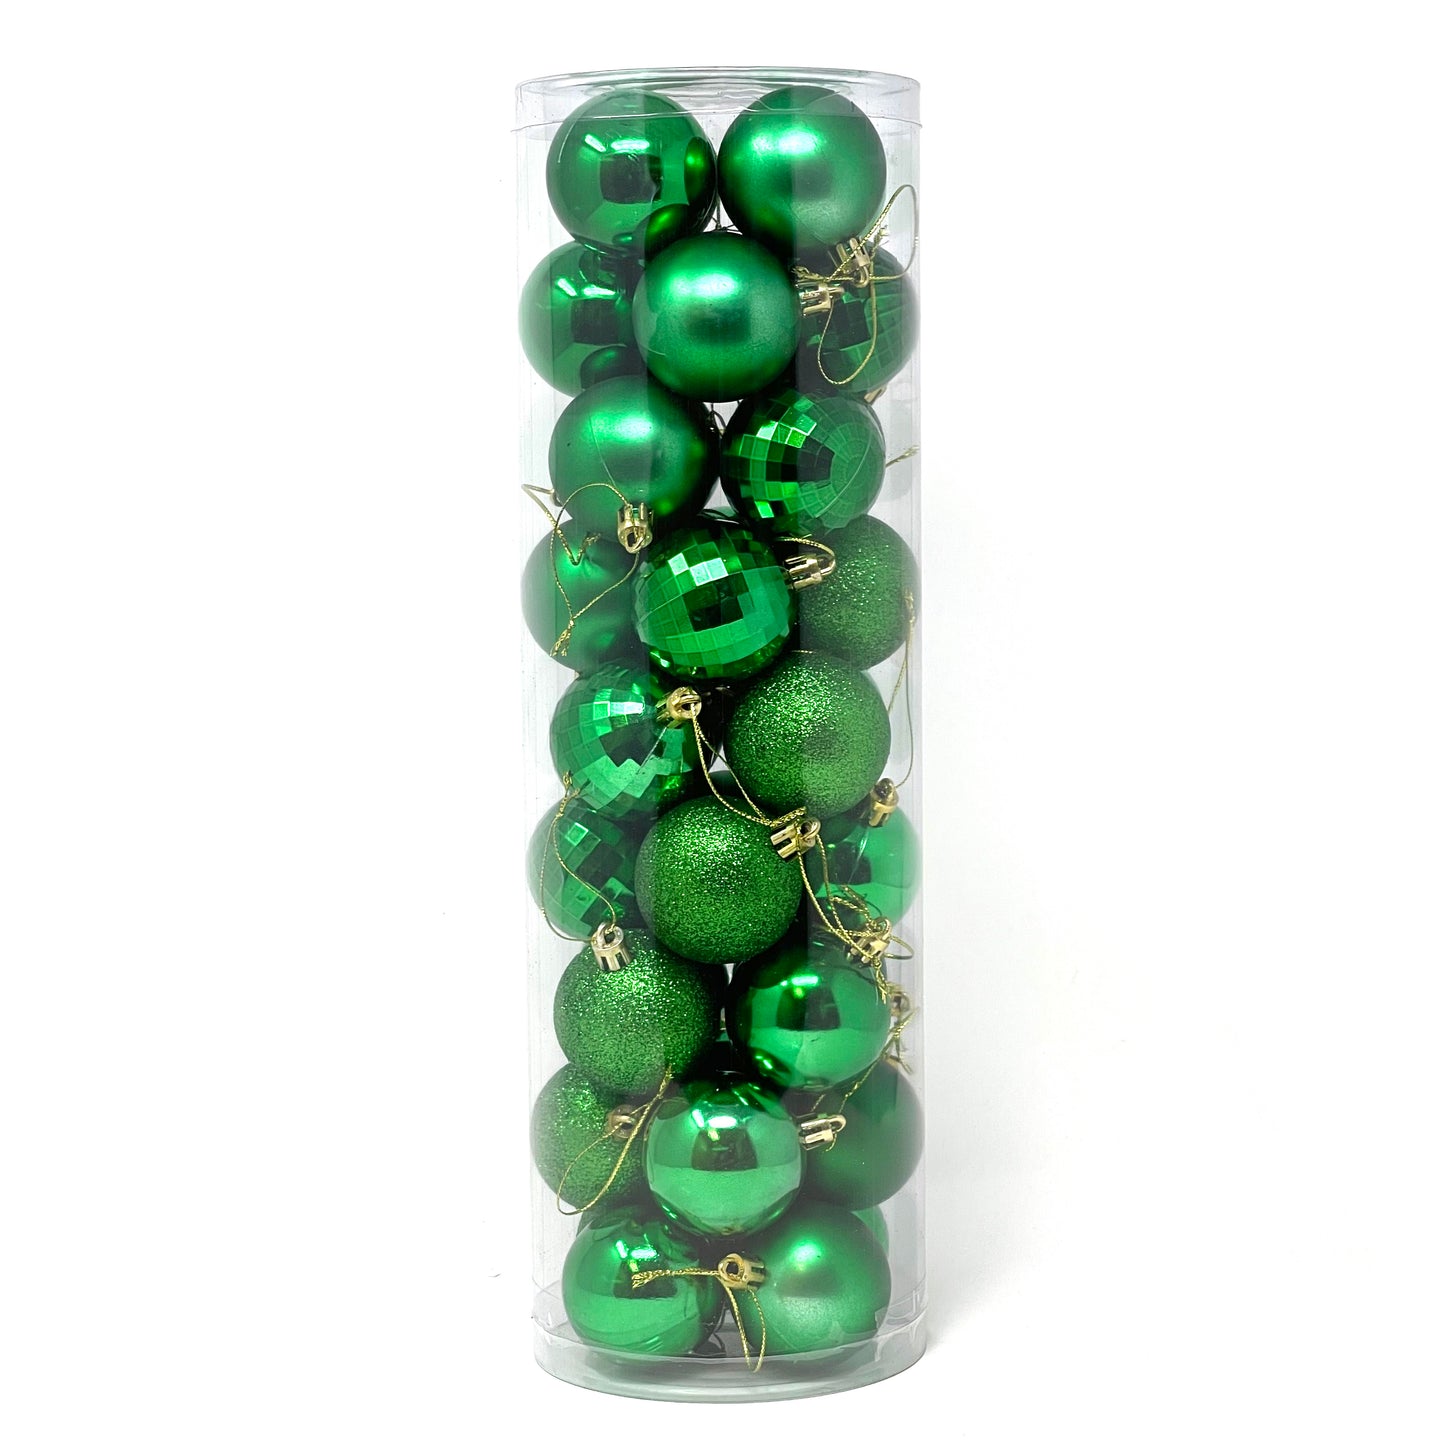 Allgala Christmas Ornament Balls - 36PK 2 Inch (5CM)  for Xmas Tree-4 Style